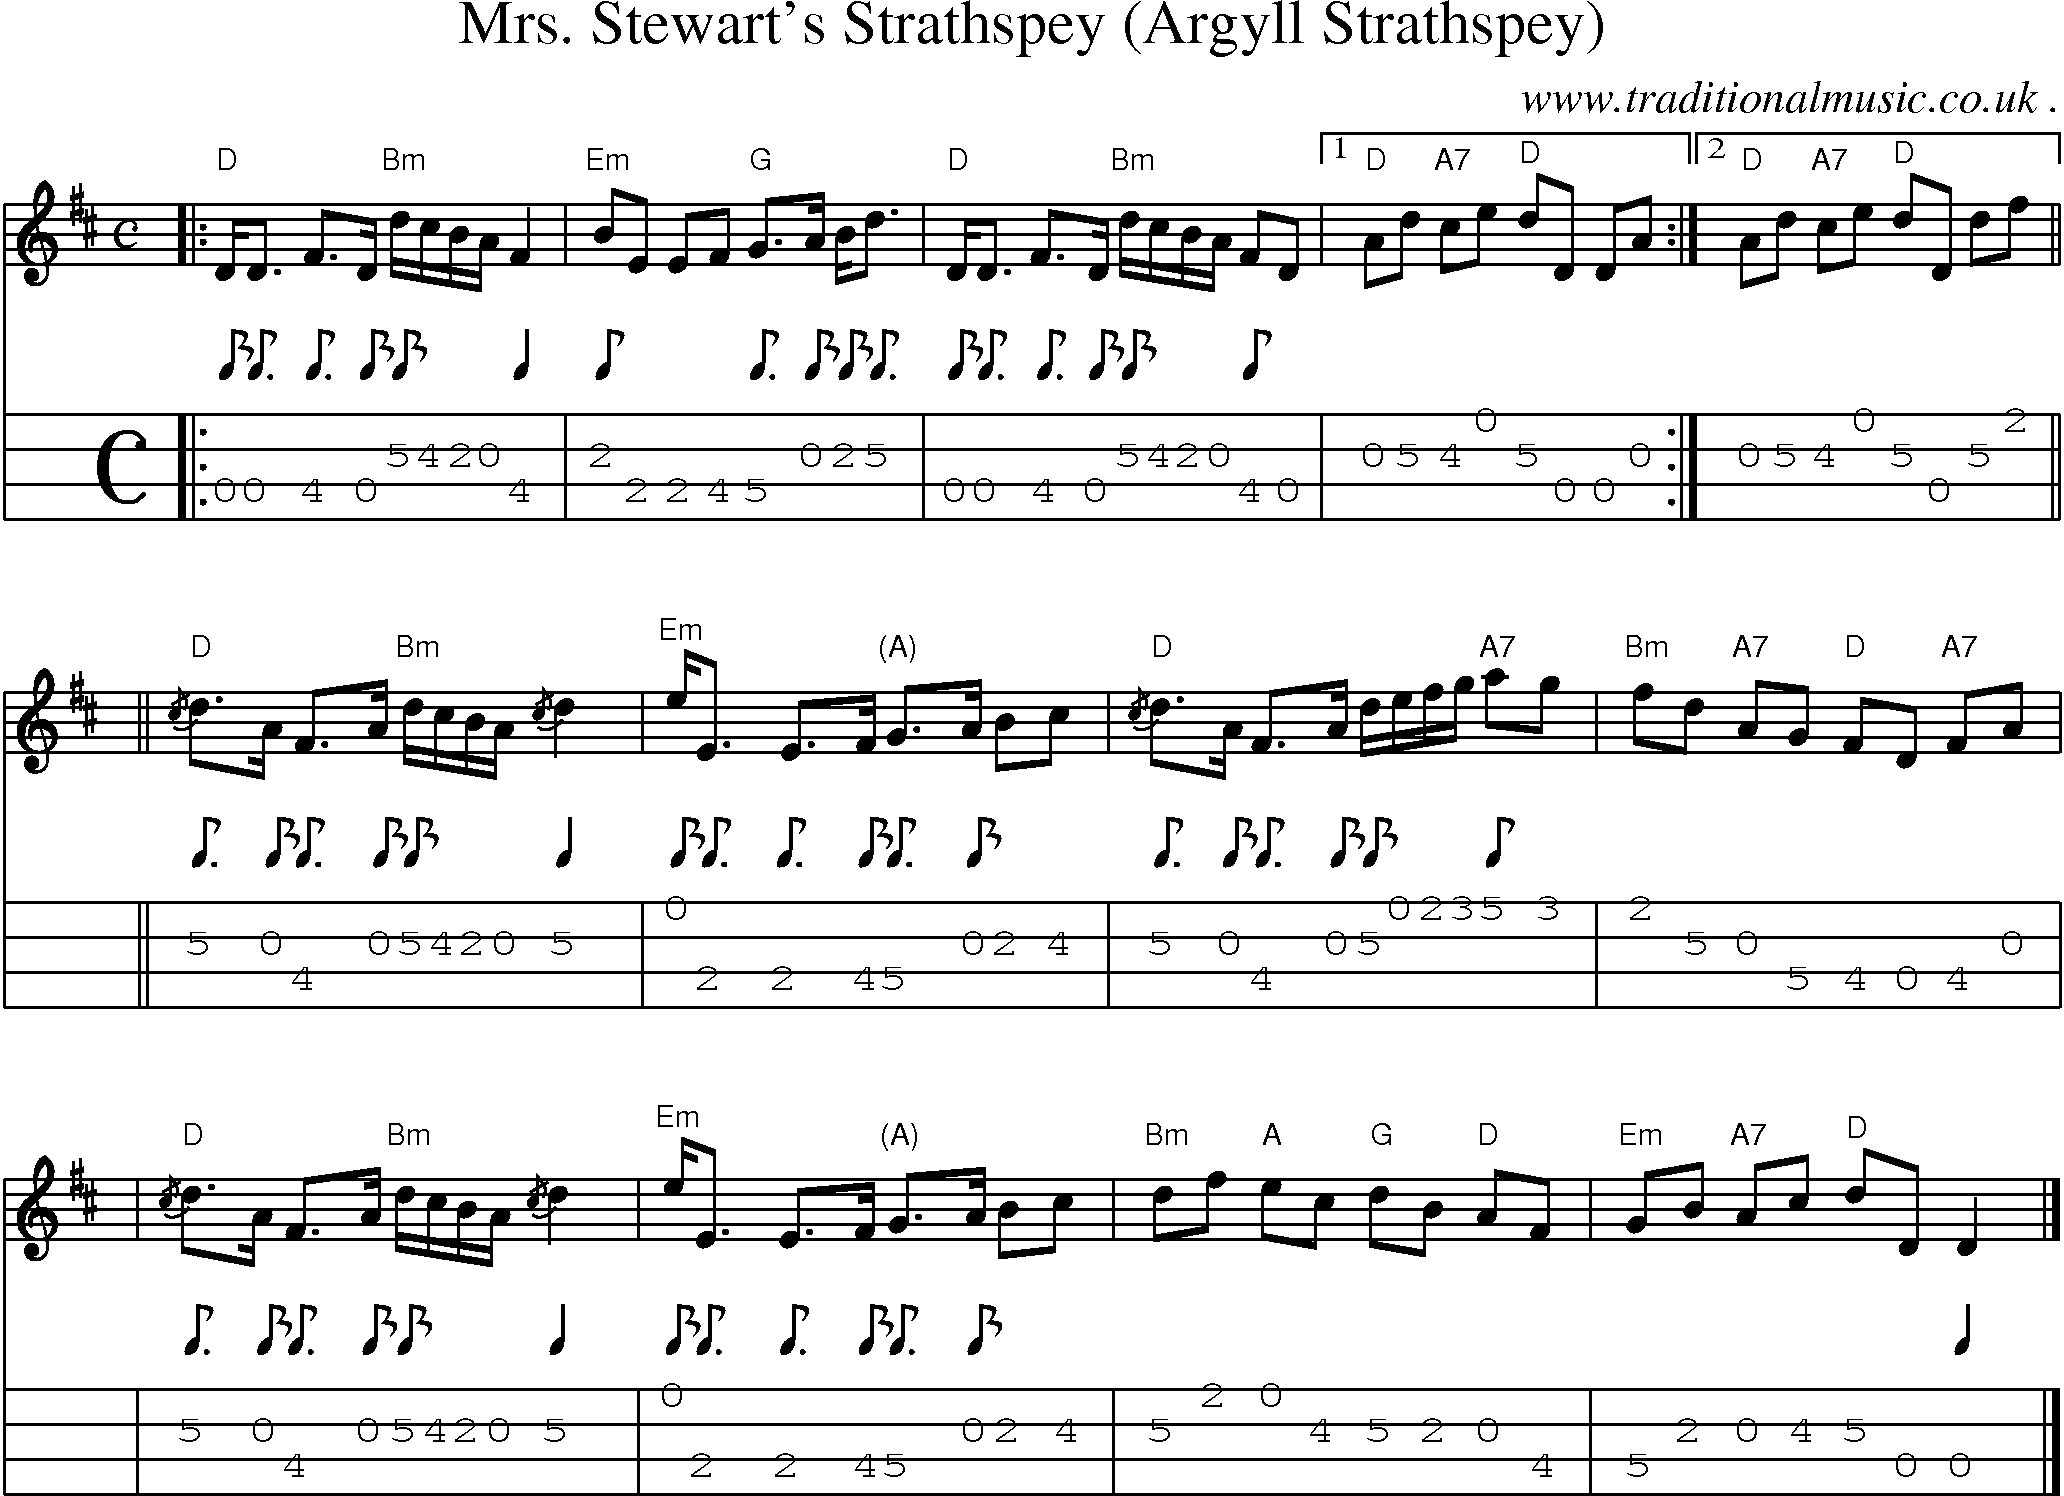 Sheet-music  score, Chords and Mandolin Tabs for Mrs Stewarts Strathspey Argyll Strathspey